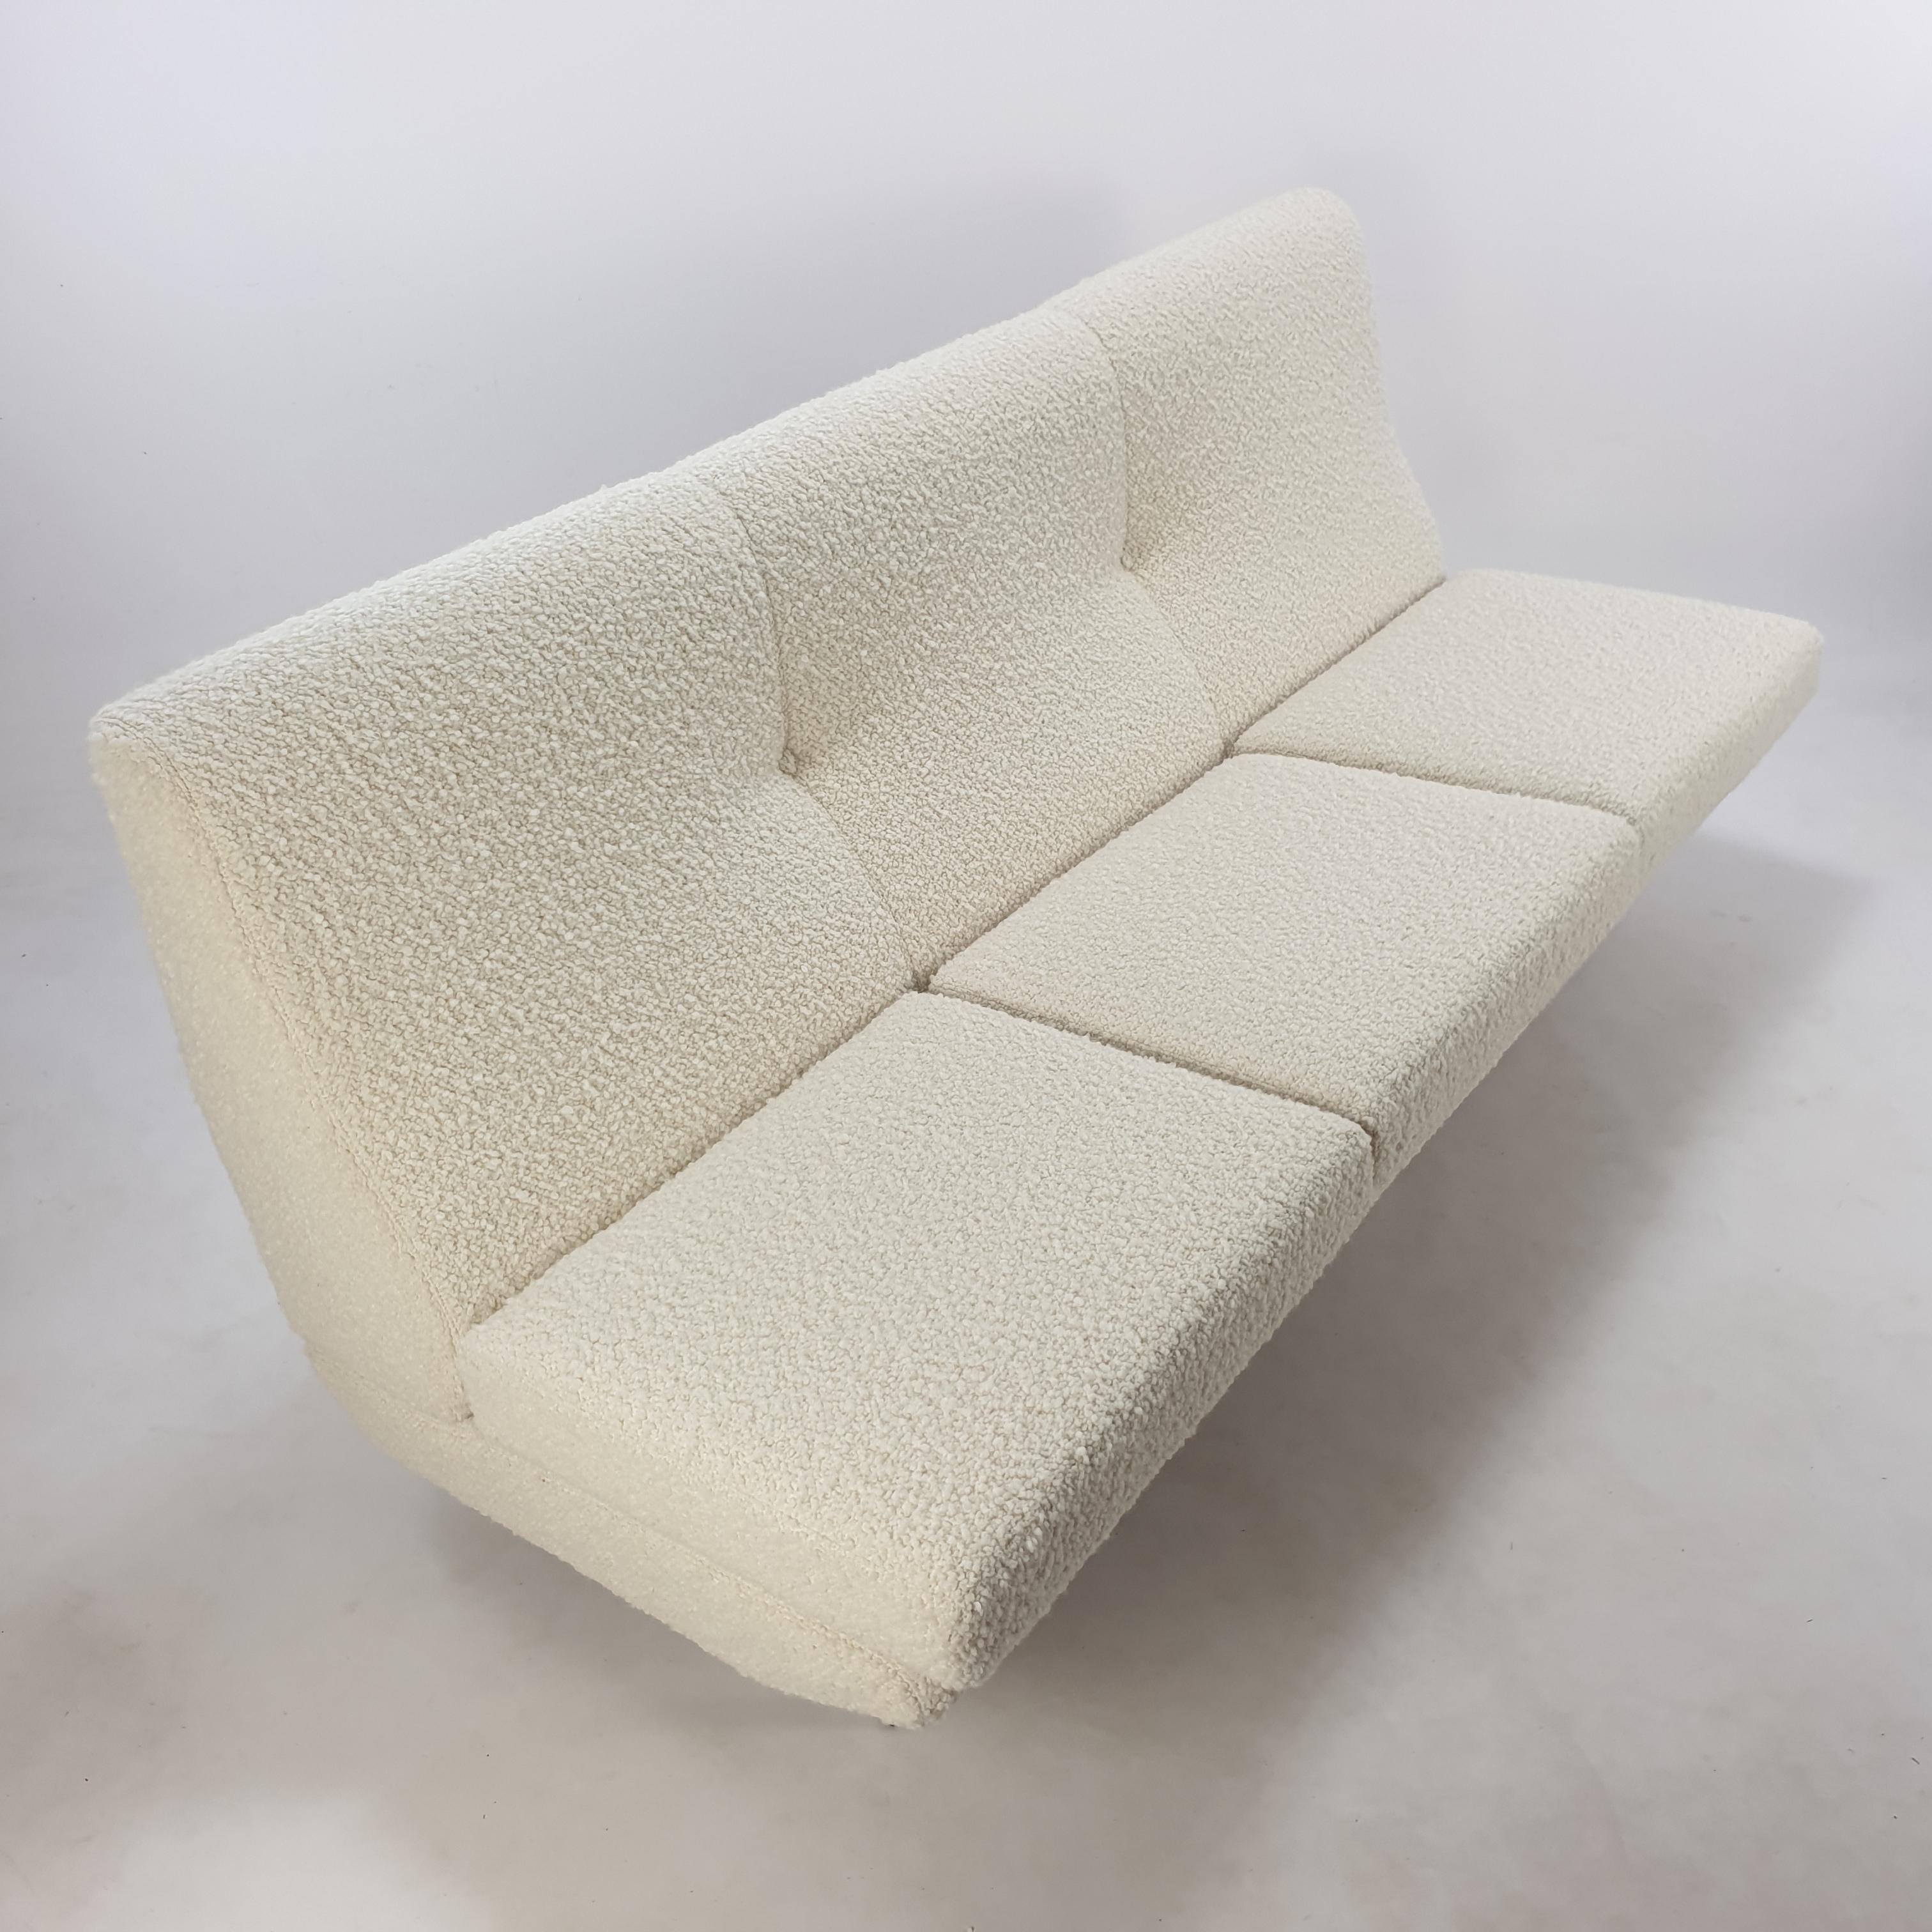 Mid Century Triennale Sofa by Marco Zanuso for Arflex, Italy, 1950s For Sale 3